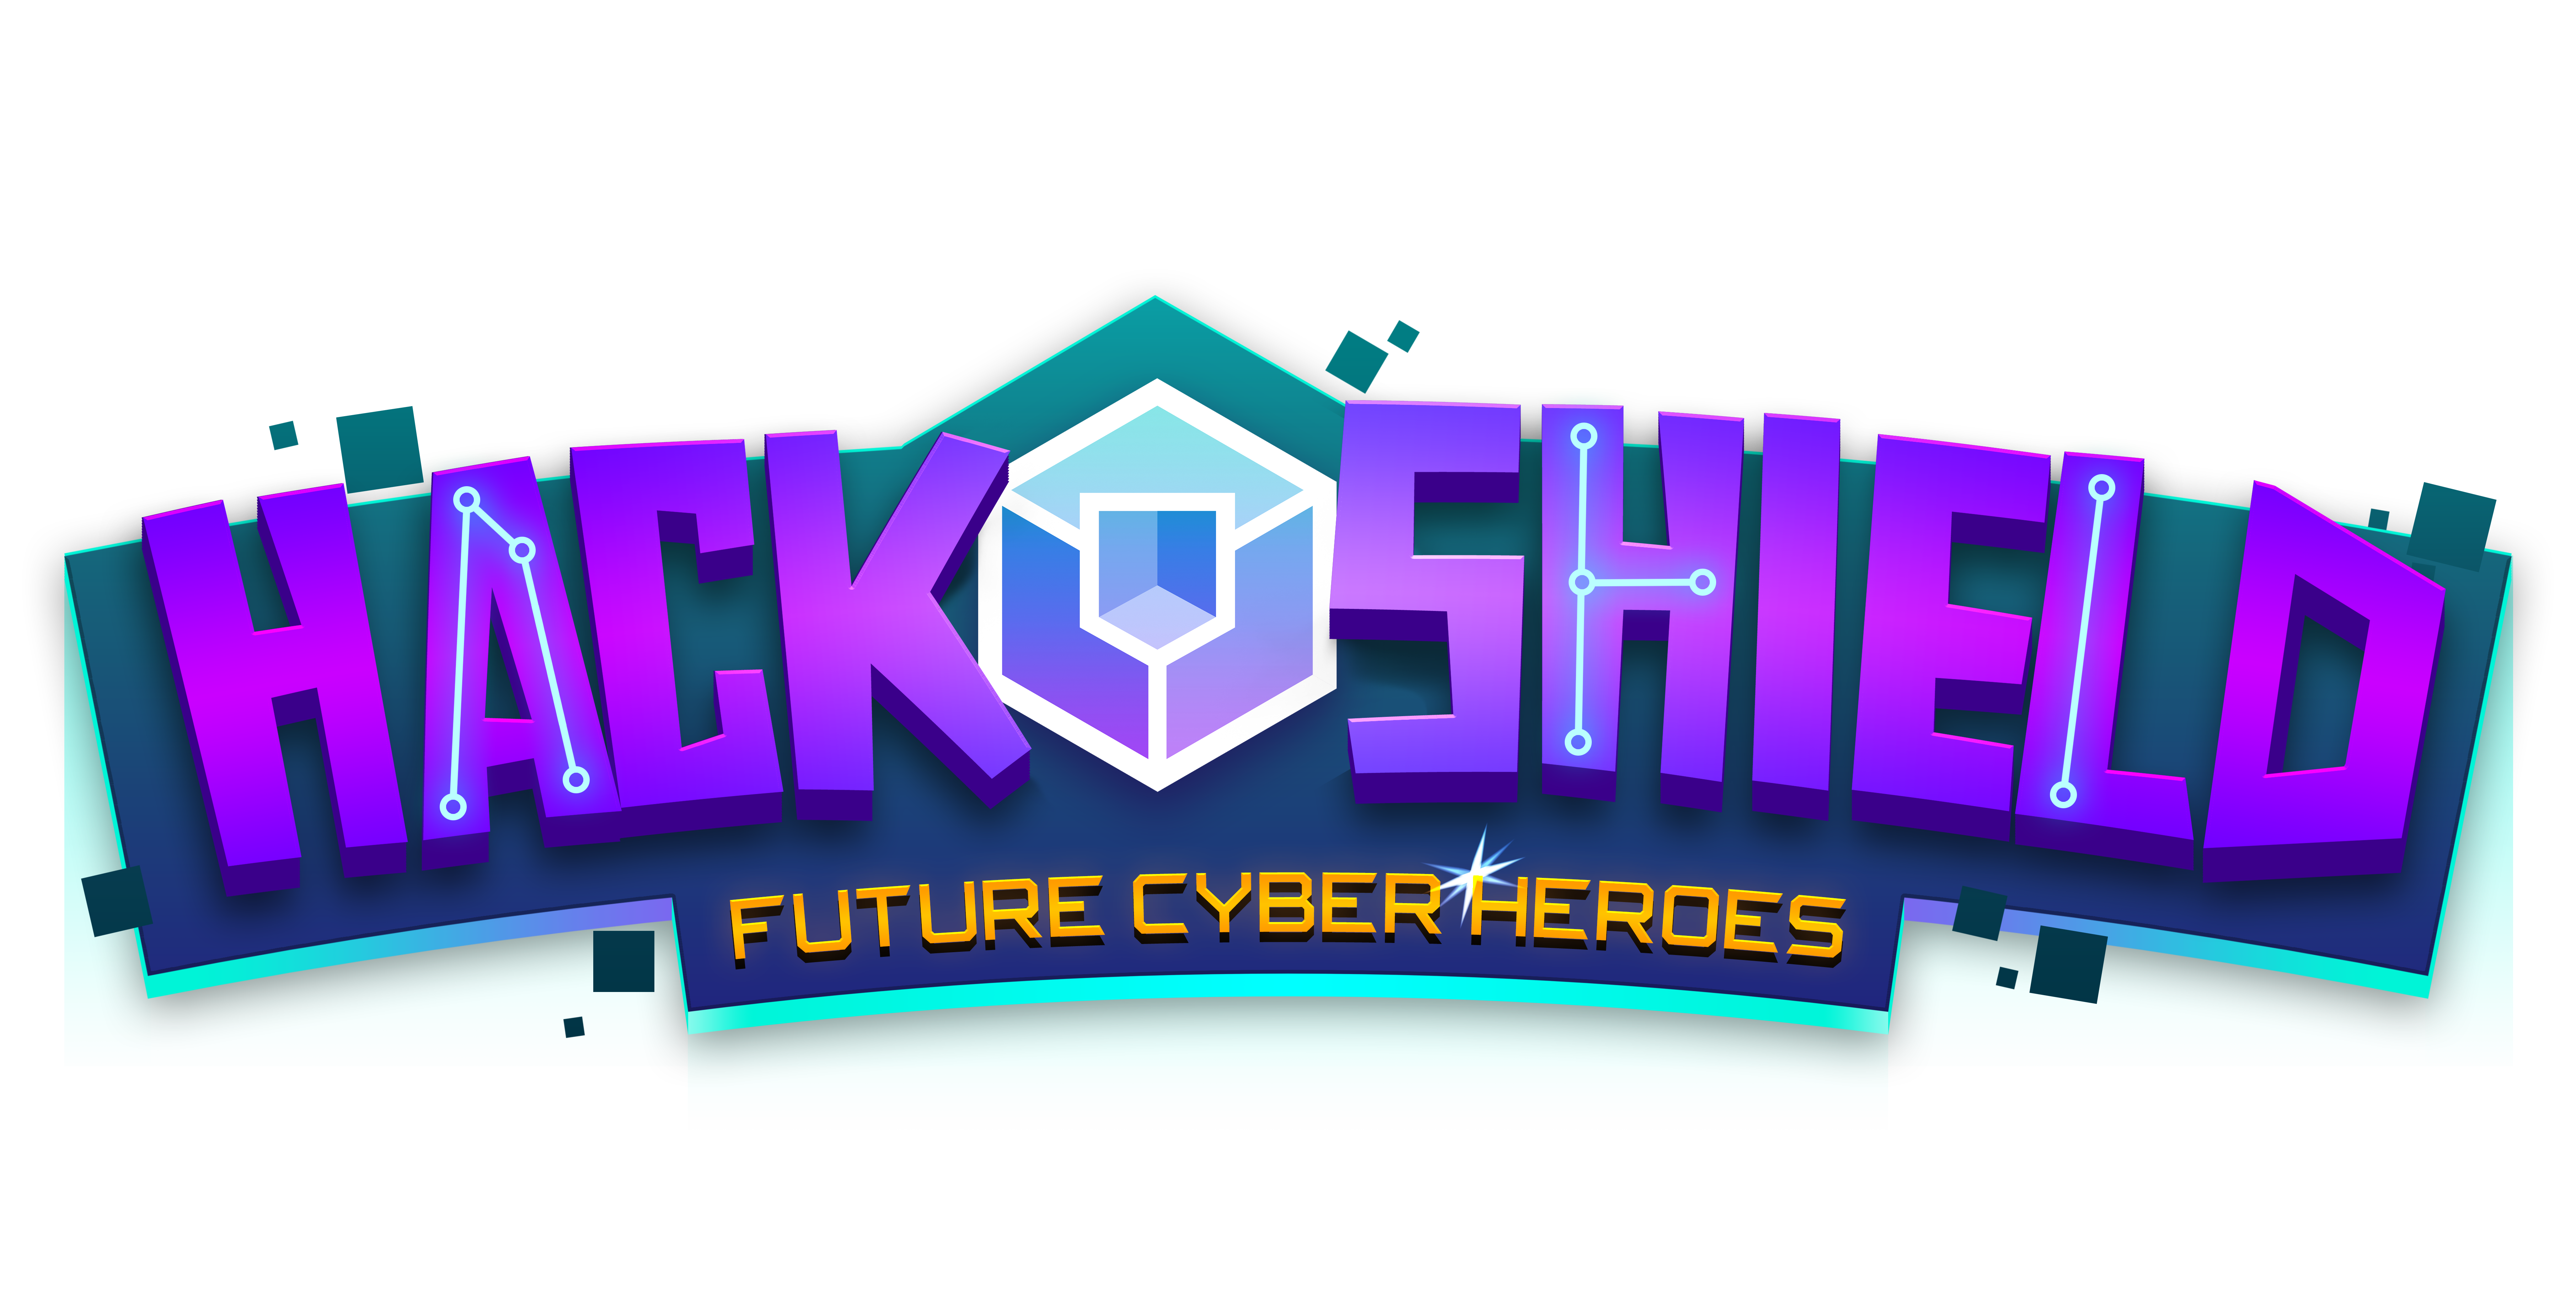 Hackshield_logo